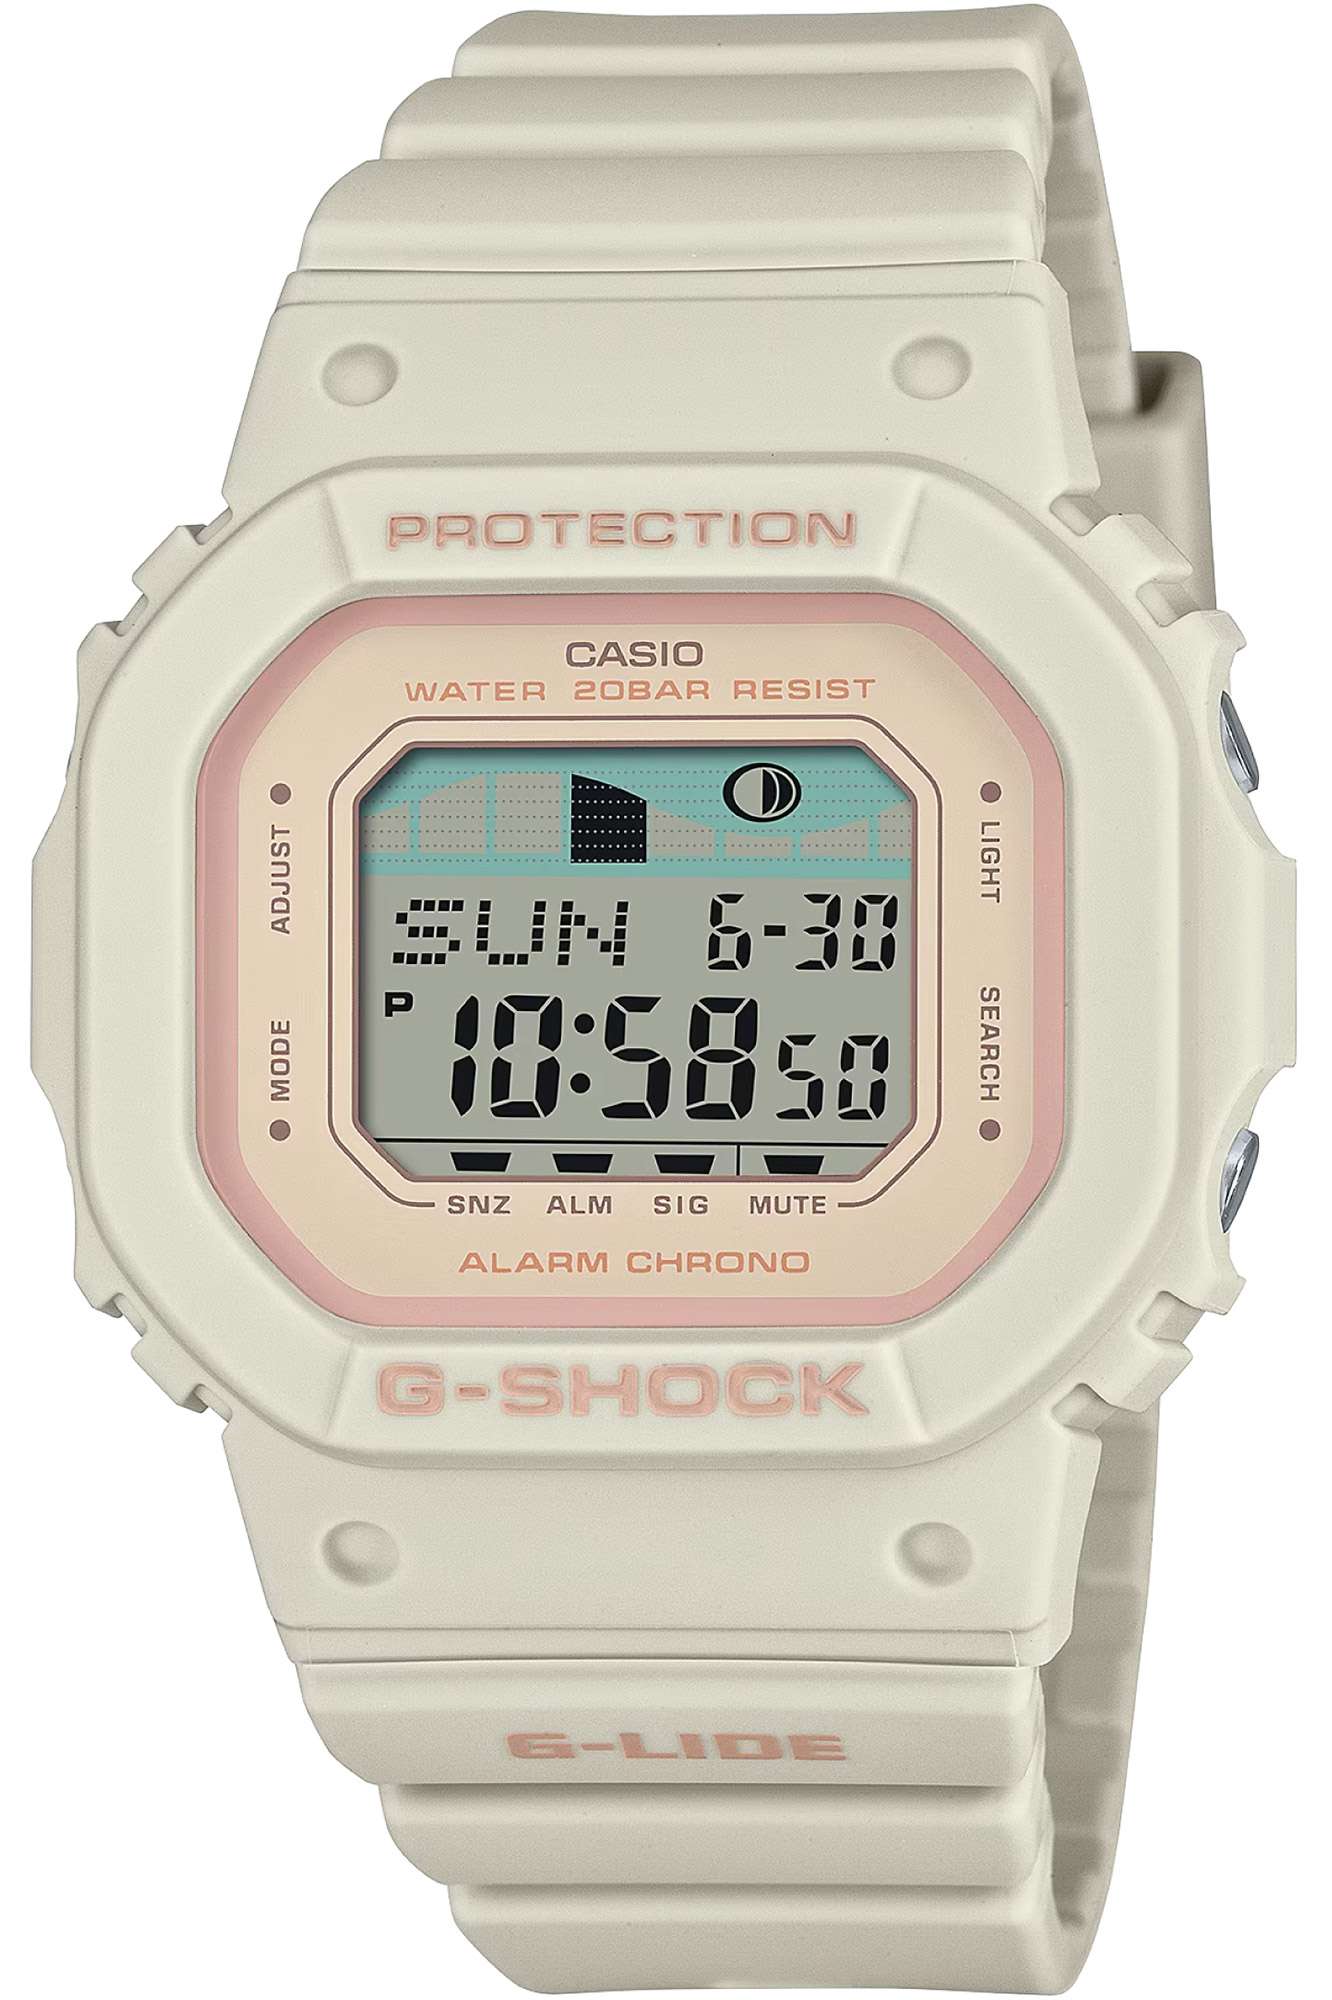 Reloj CASIO G-Shock glx-s5600-7er